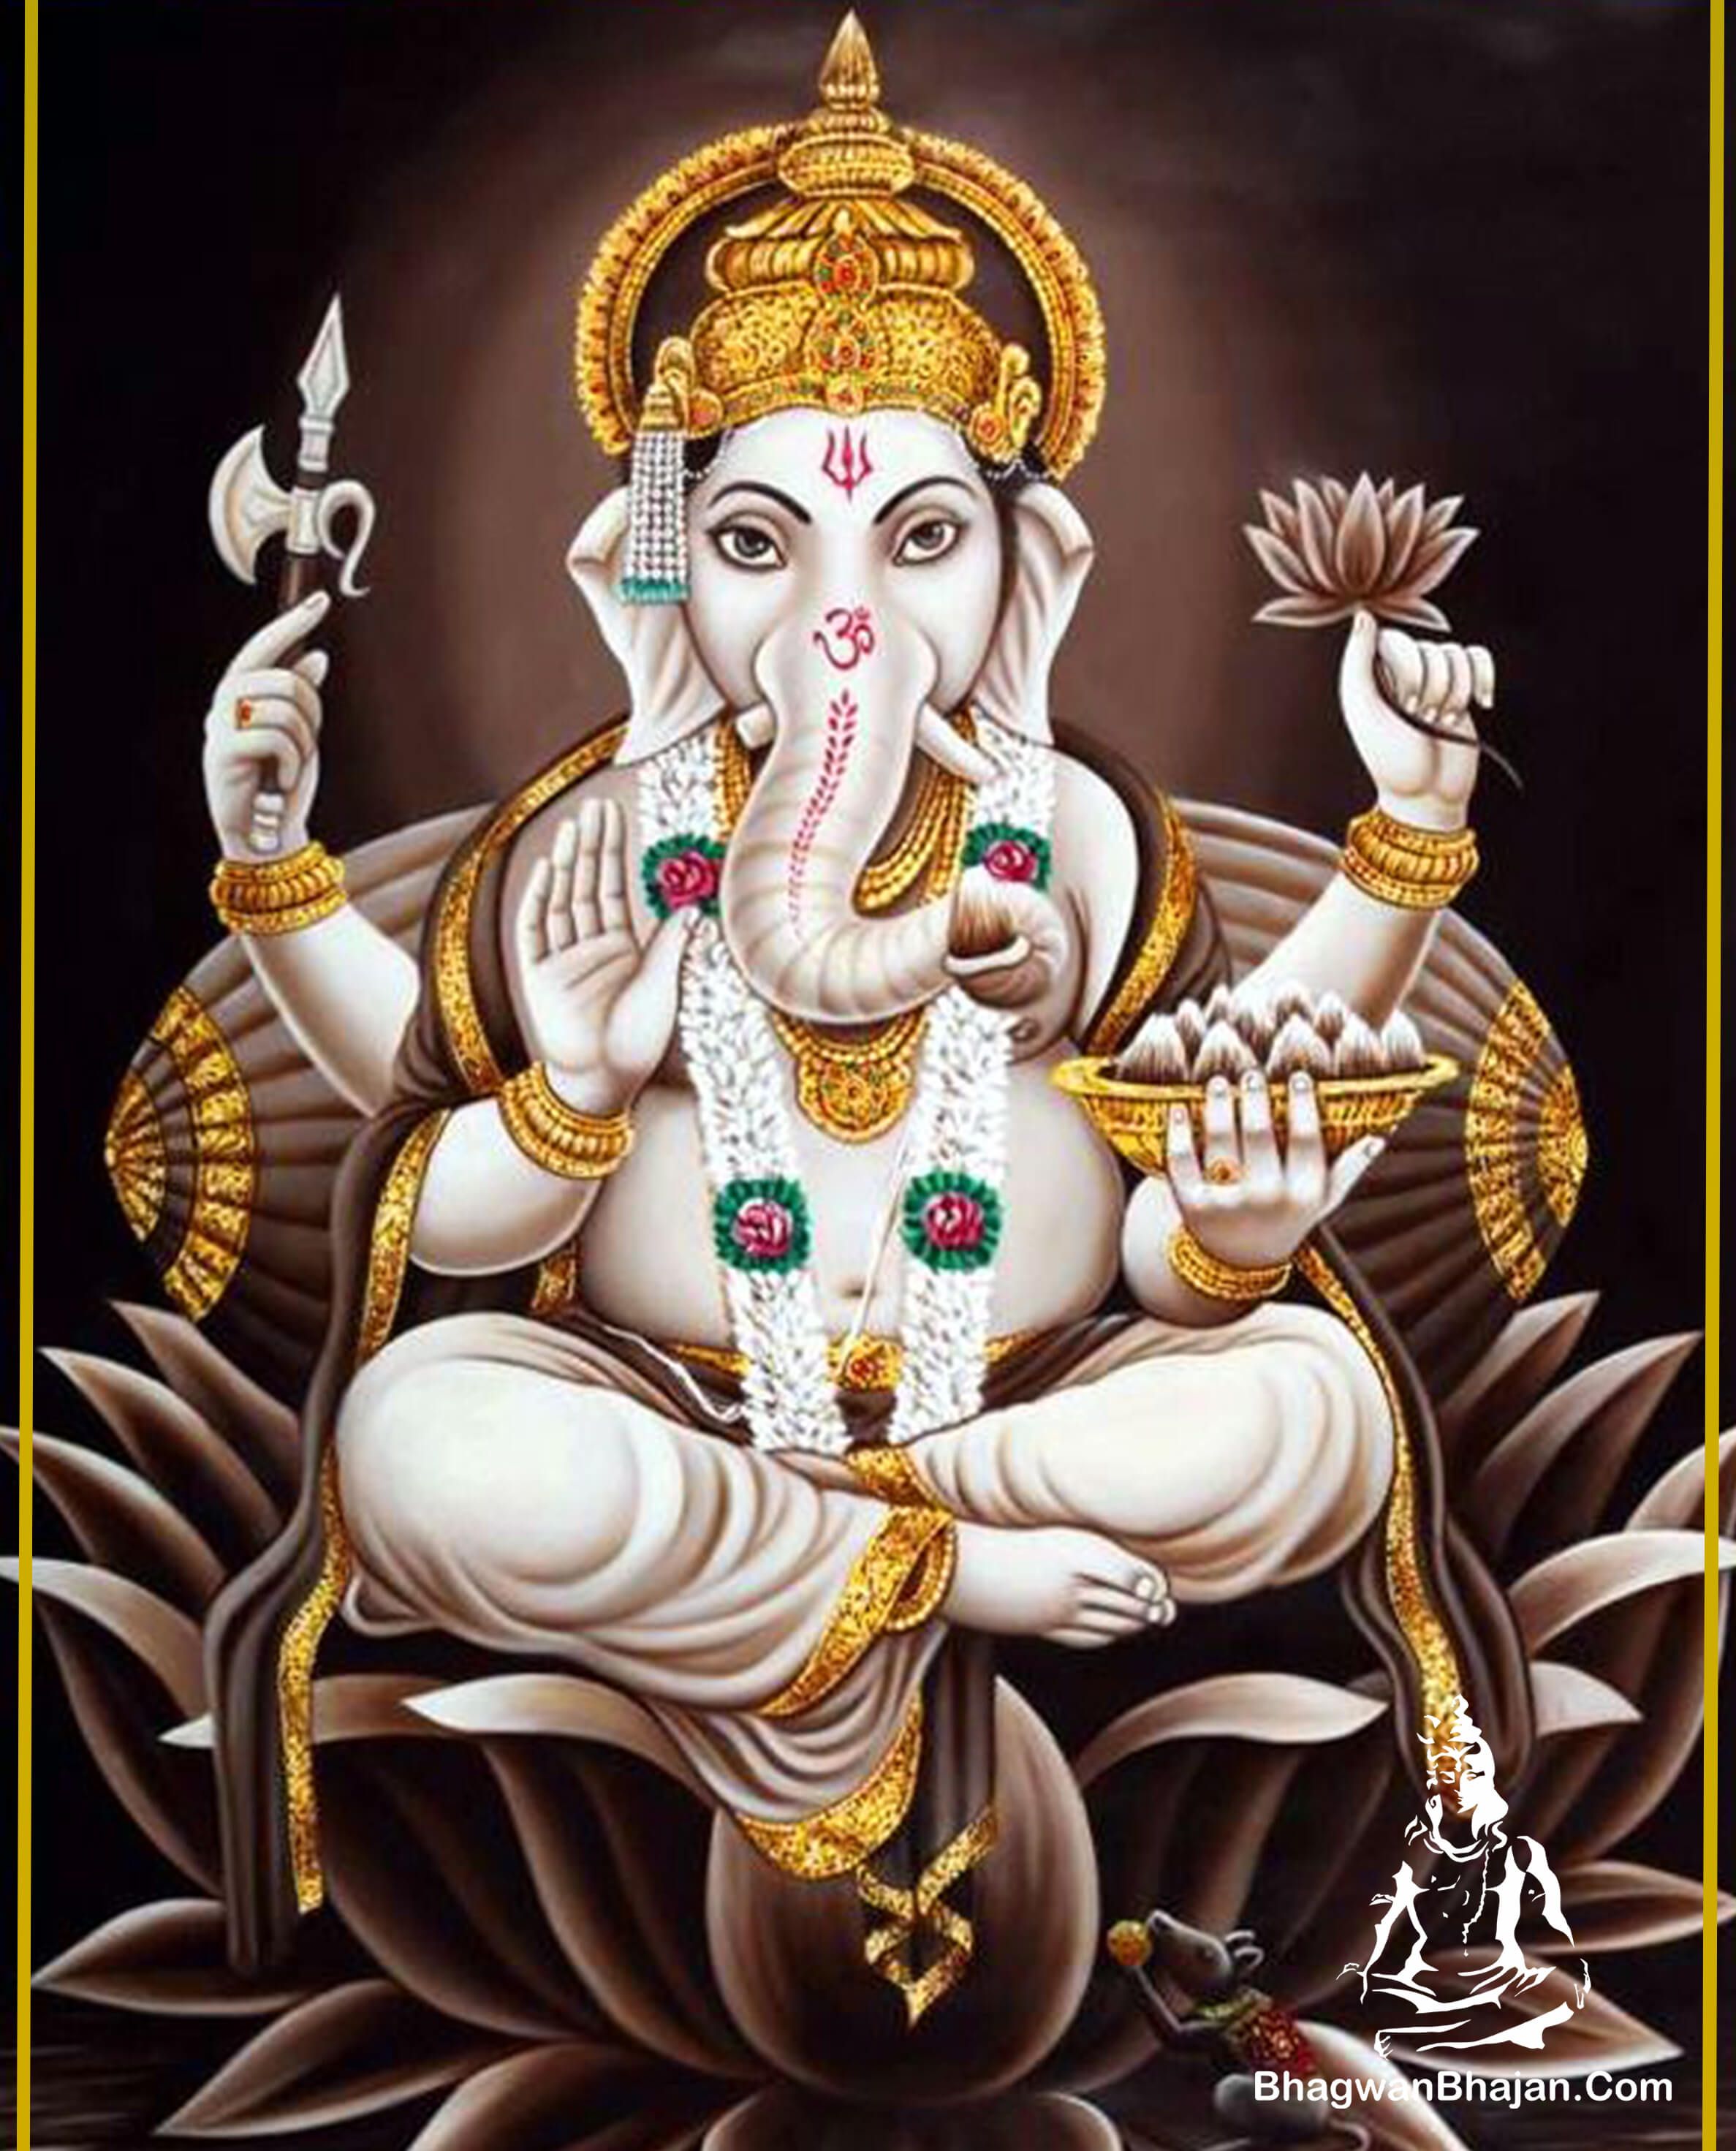 Download Bhagwan Shree Ganesh Free HD Wallpaper. Ganpati Bappa Wallpaper. Latest & New Lord Ganesha Picture, Image & Photo